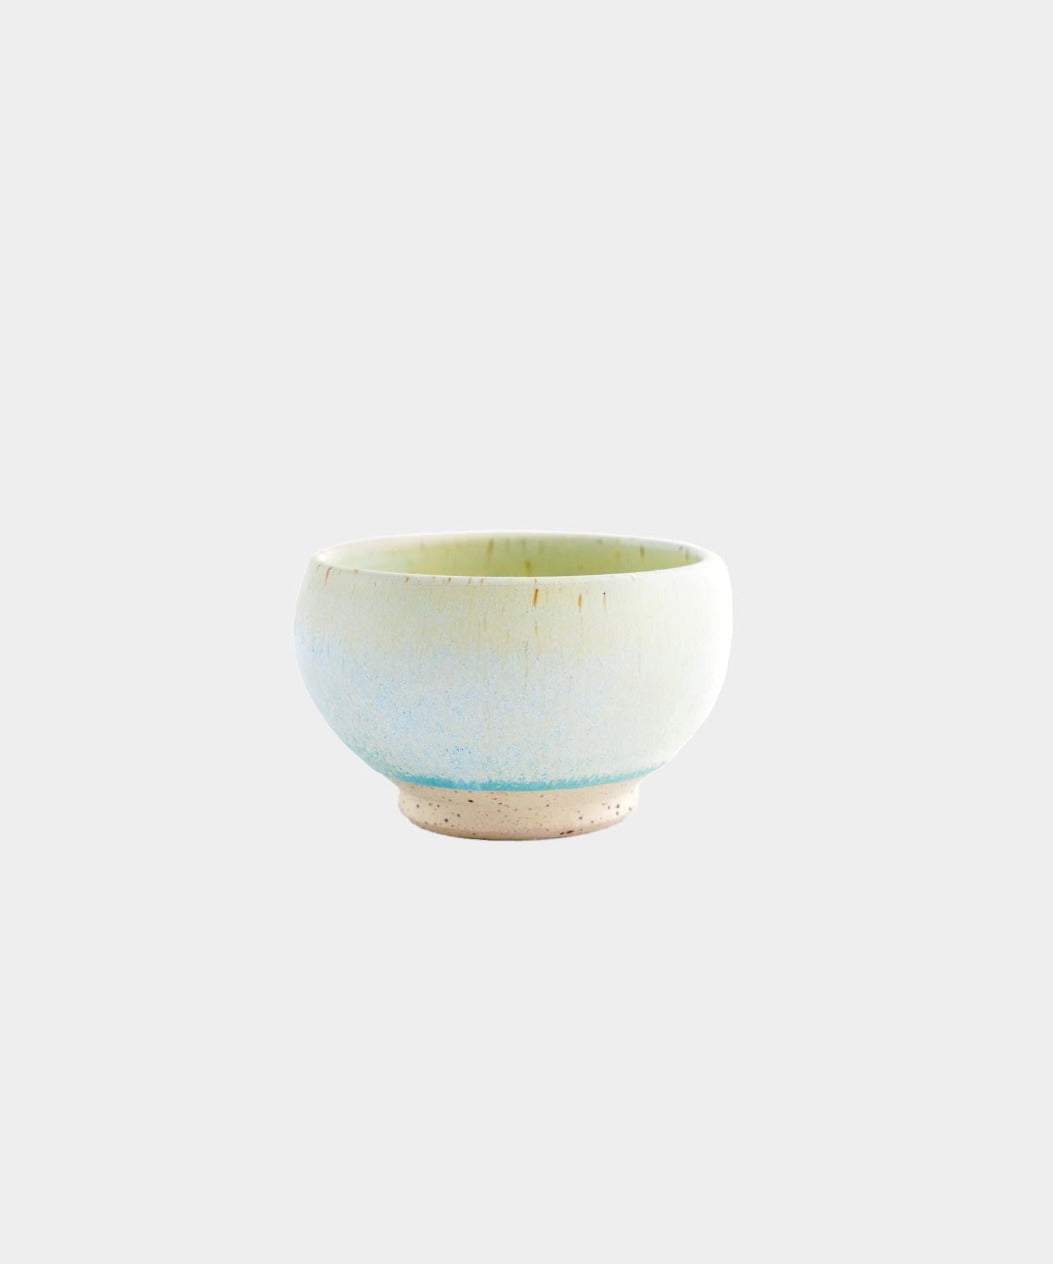 Håndlavet Keramik Nøddeskål | AQUA by Vang | Kerama